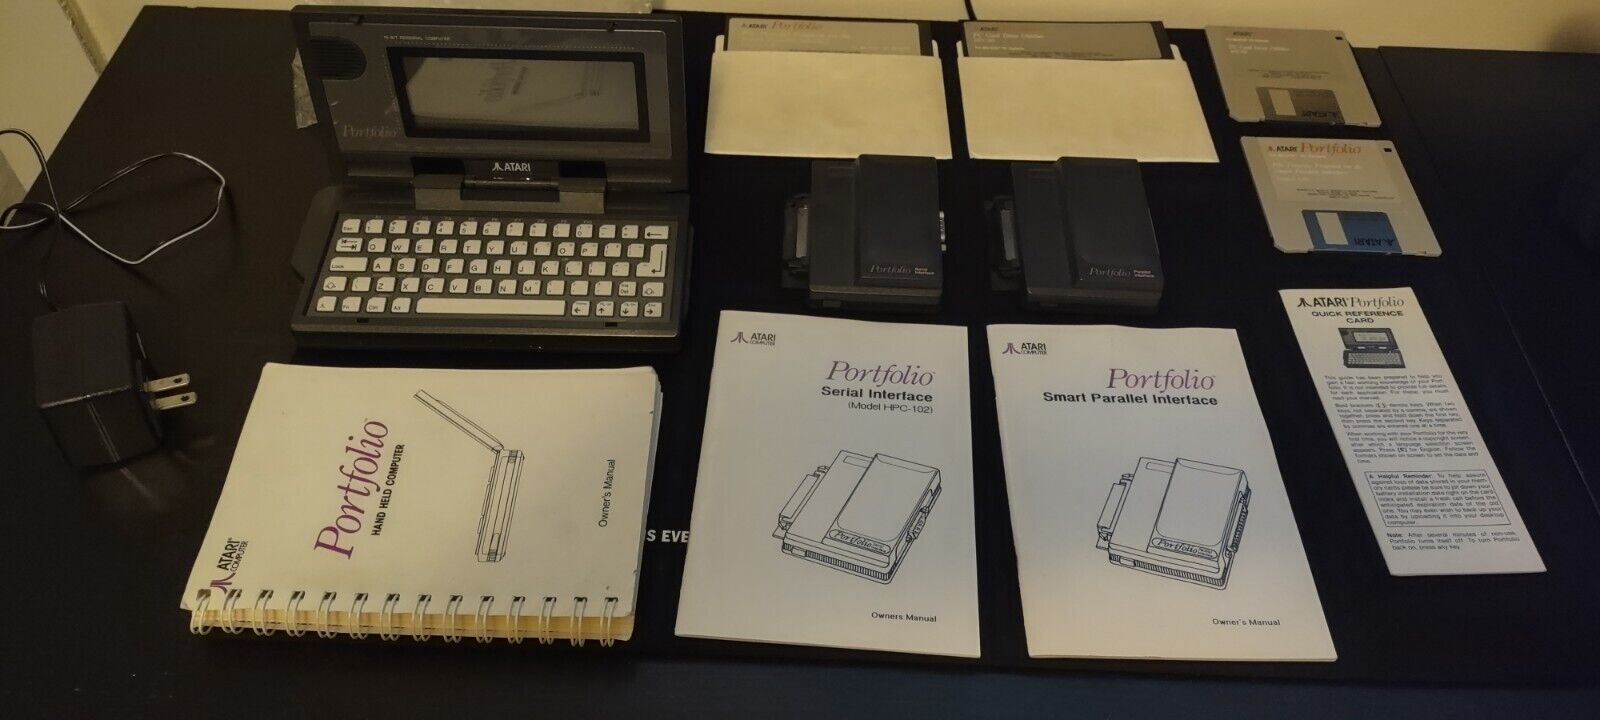 Atari Portfolio HPC-004  Manuals Disks Serial Parallel Interface Terminator Prop